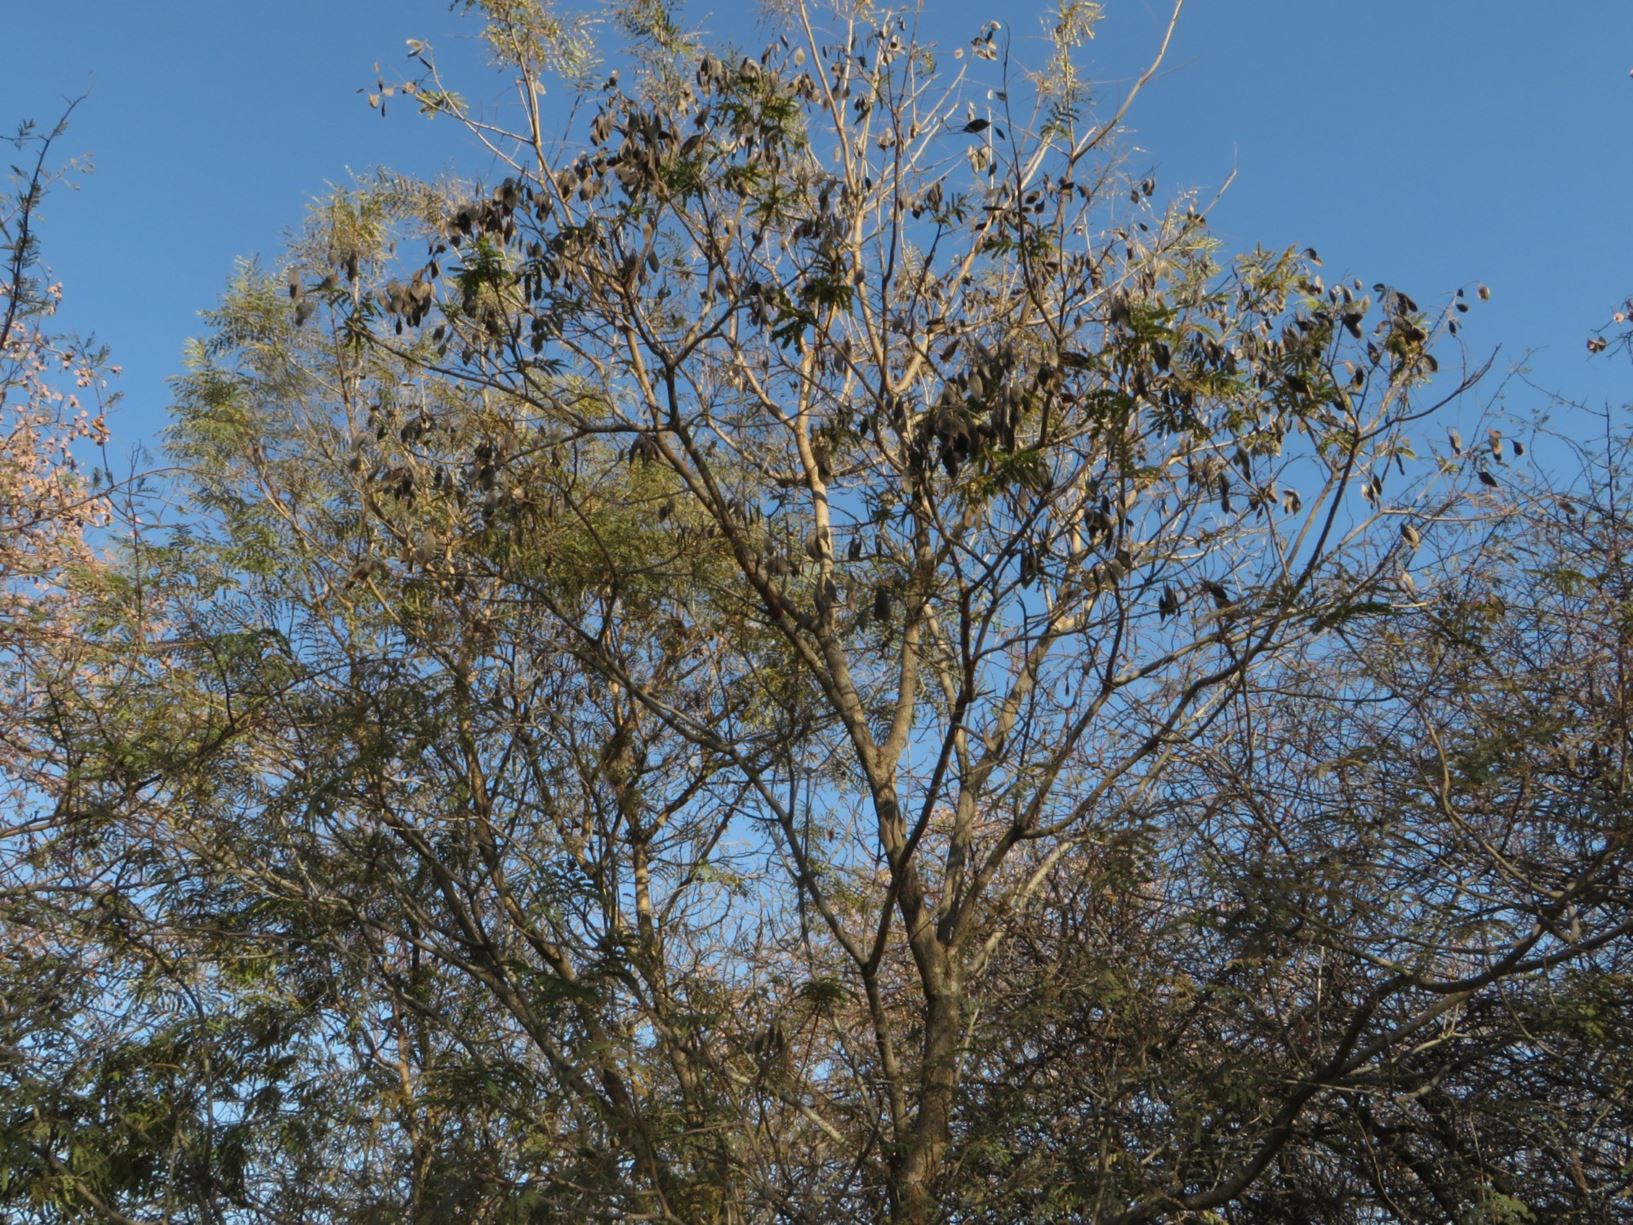 Peltophorum africanum - Boerboon, Dopperkiaat, Huilboerboom, huilboom, Kajatehout, Kiaathout, African black wattle, African Blackwood, Black Wattle, African wattle, Isikhabamkhombe